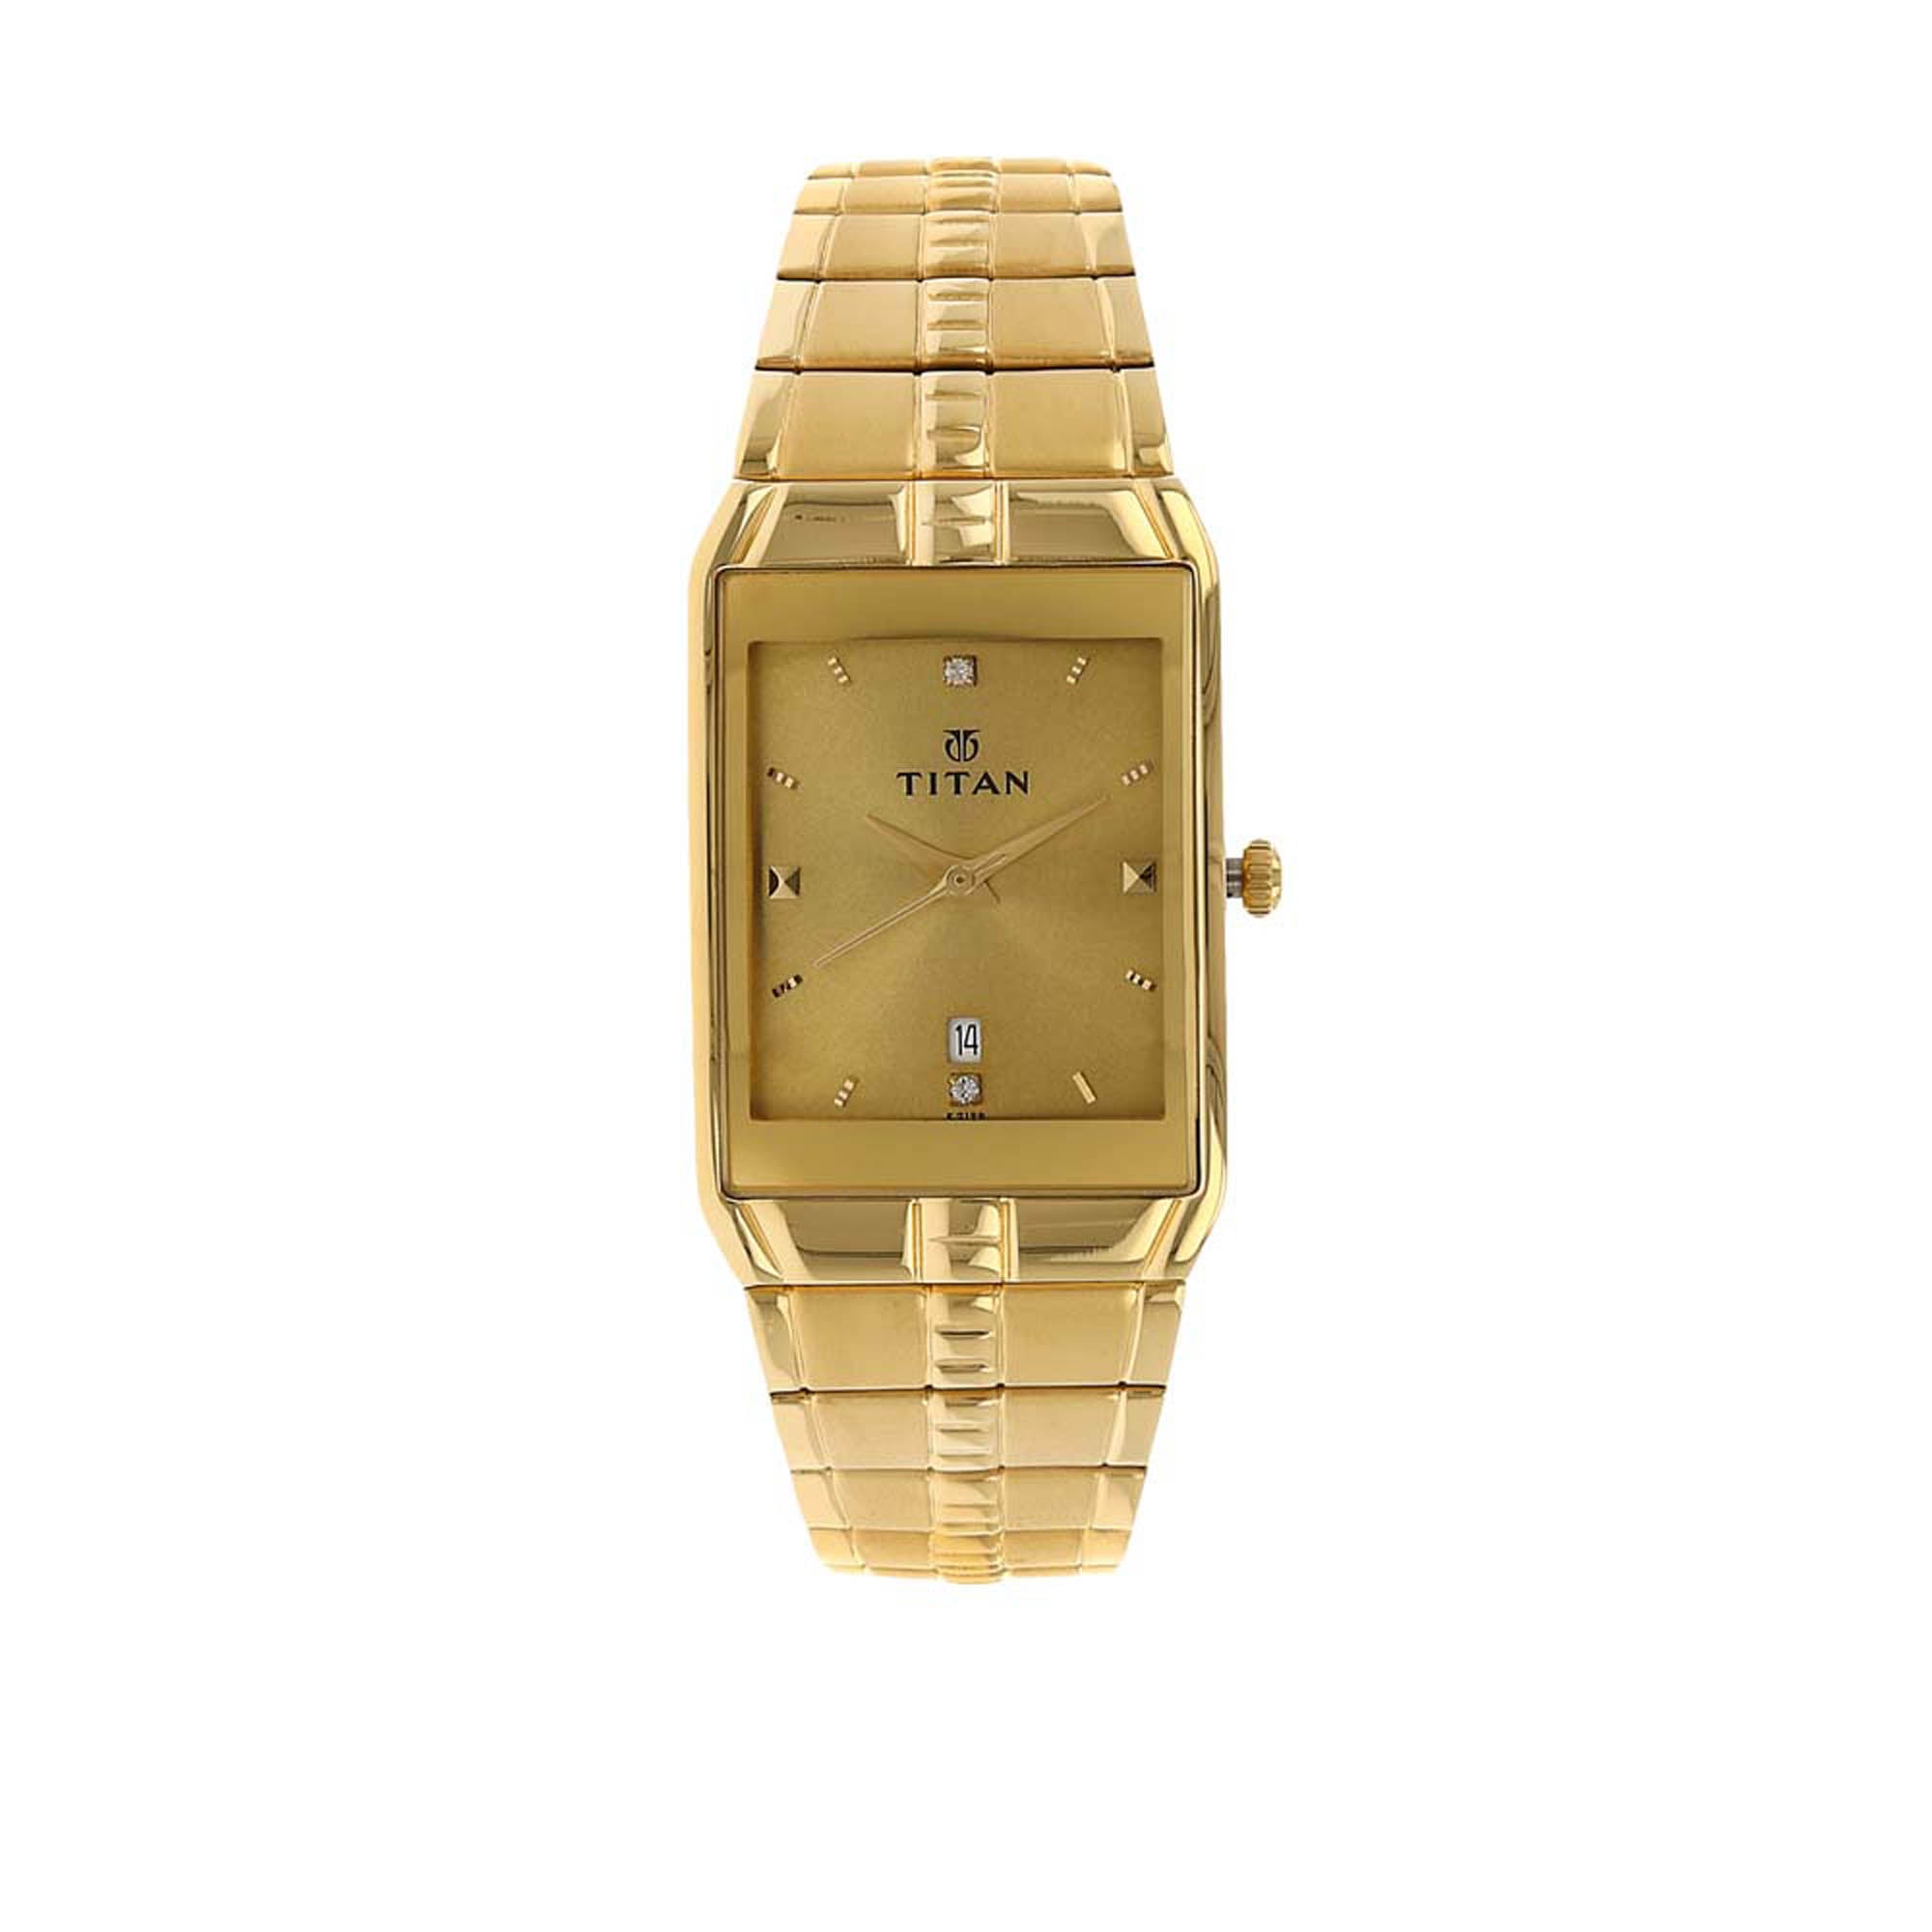 Titan Golden Dial Analog with DateMetal Strap watch for Men